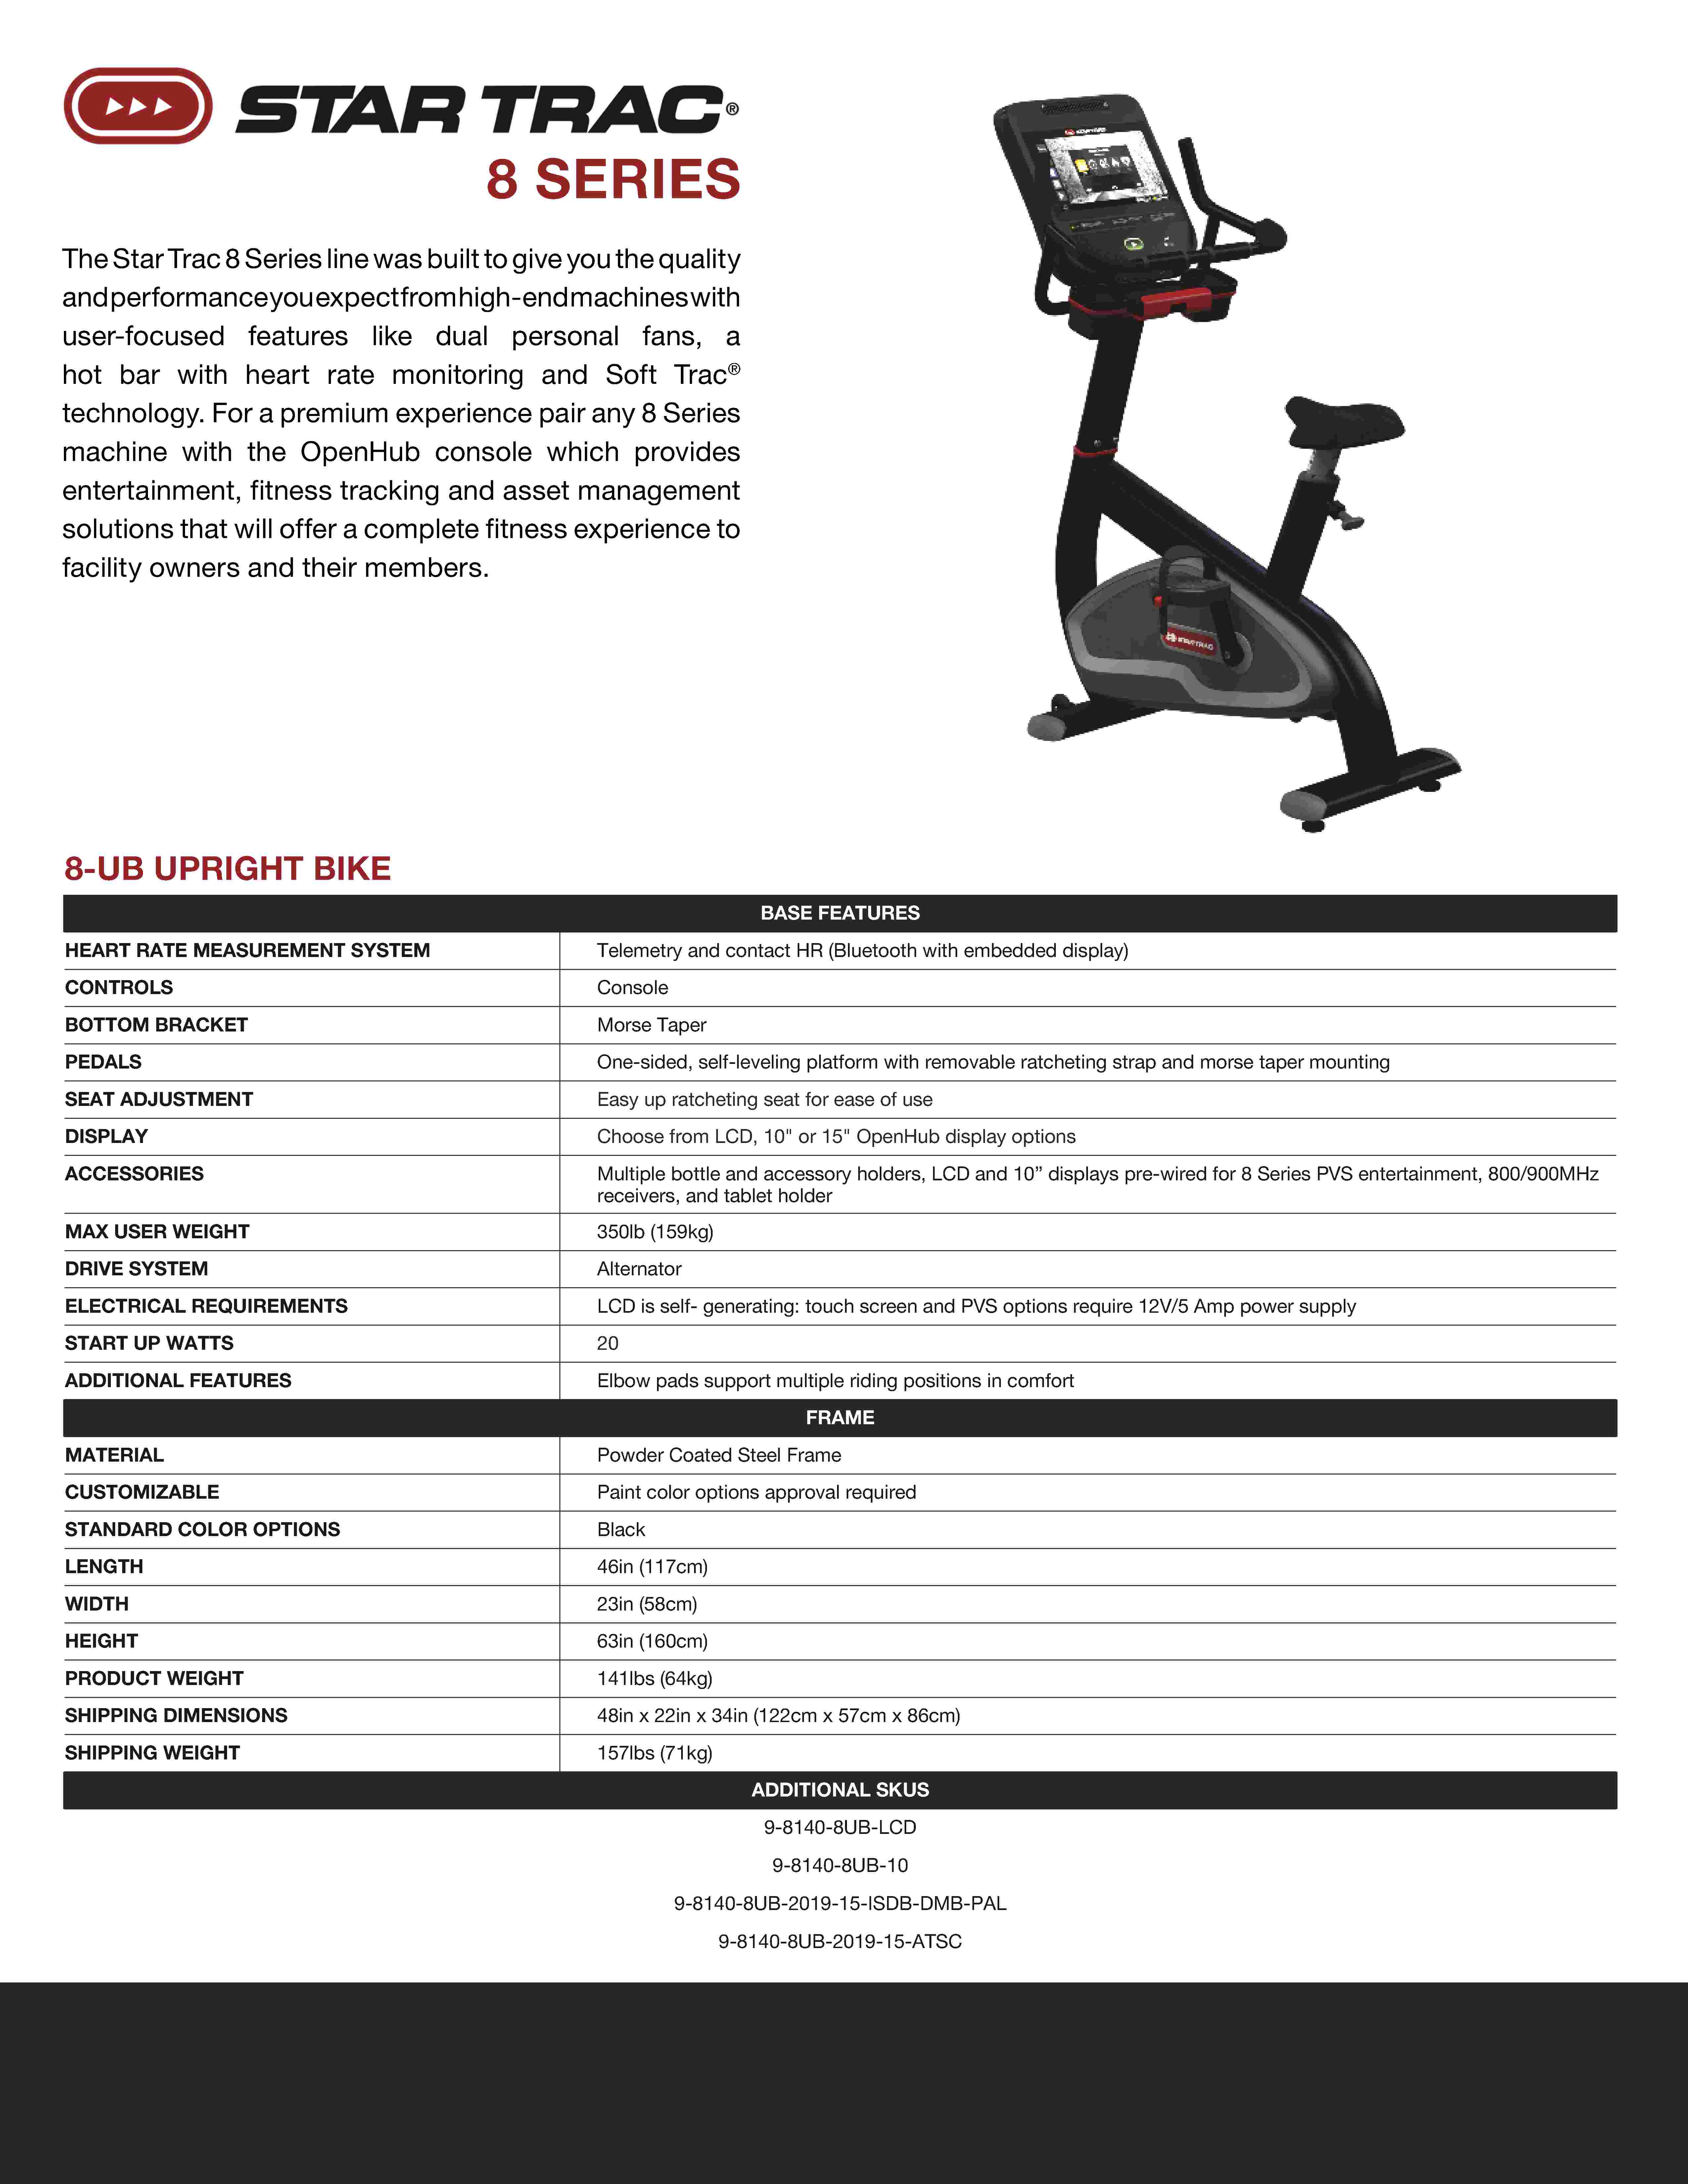 Star Trac 8UB Upright Bike Product Sheet 001